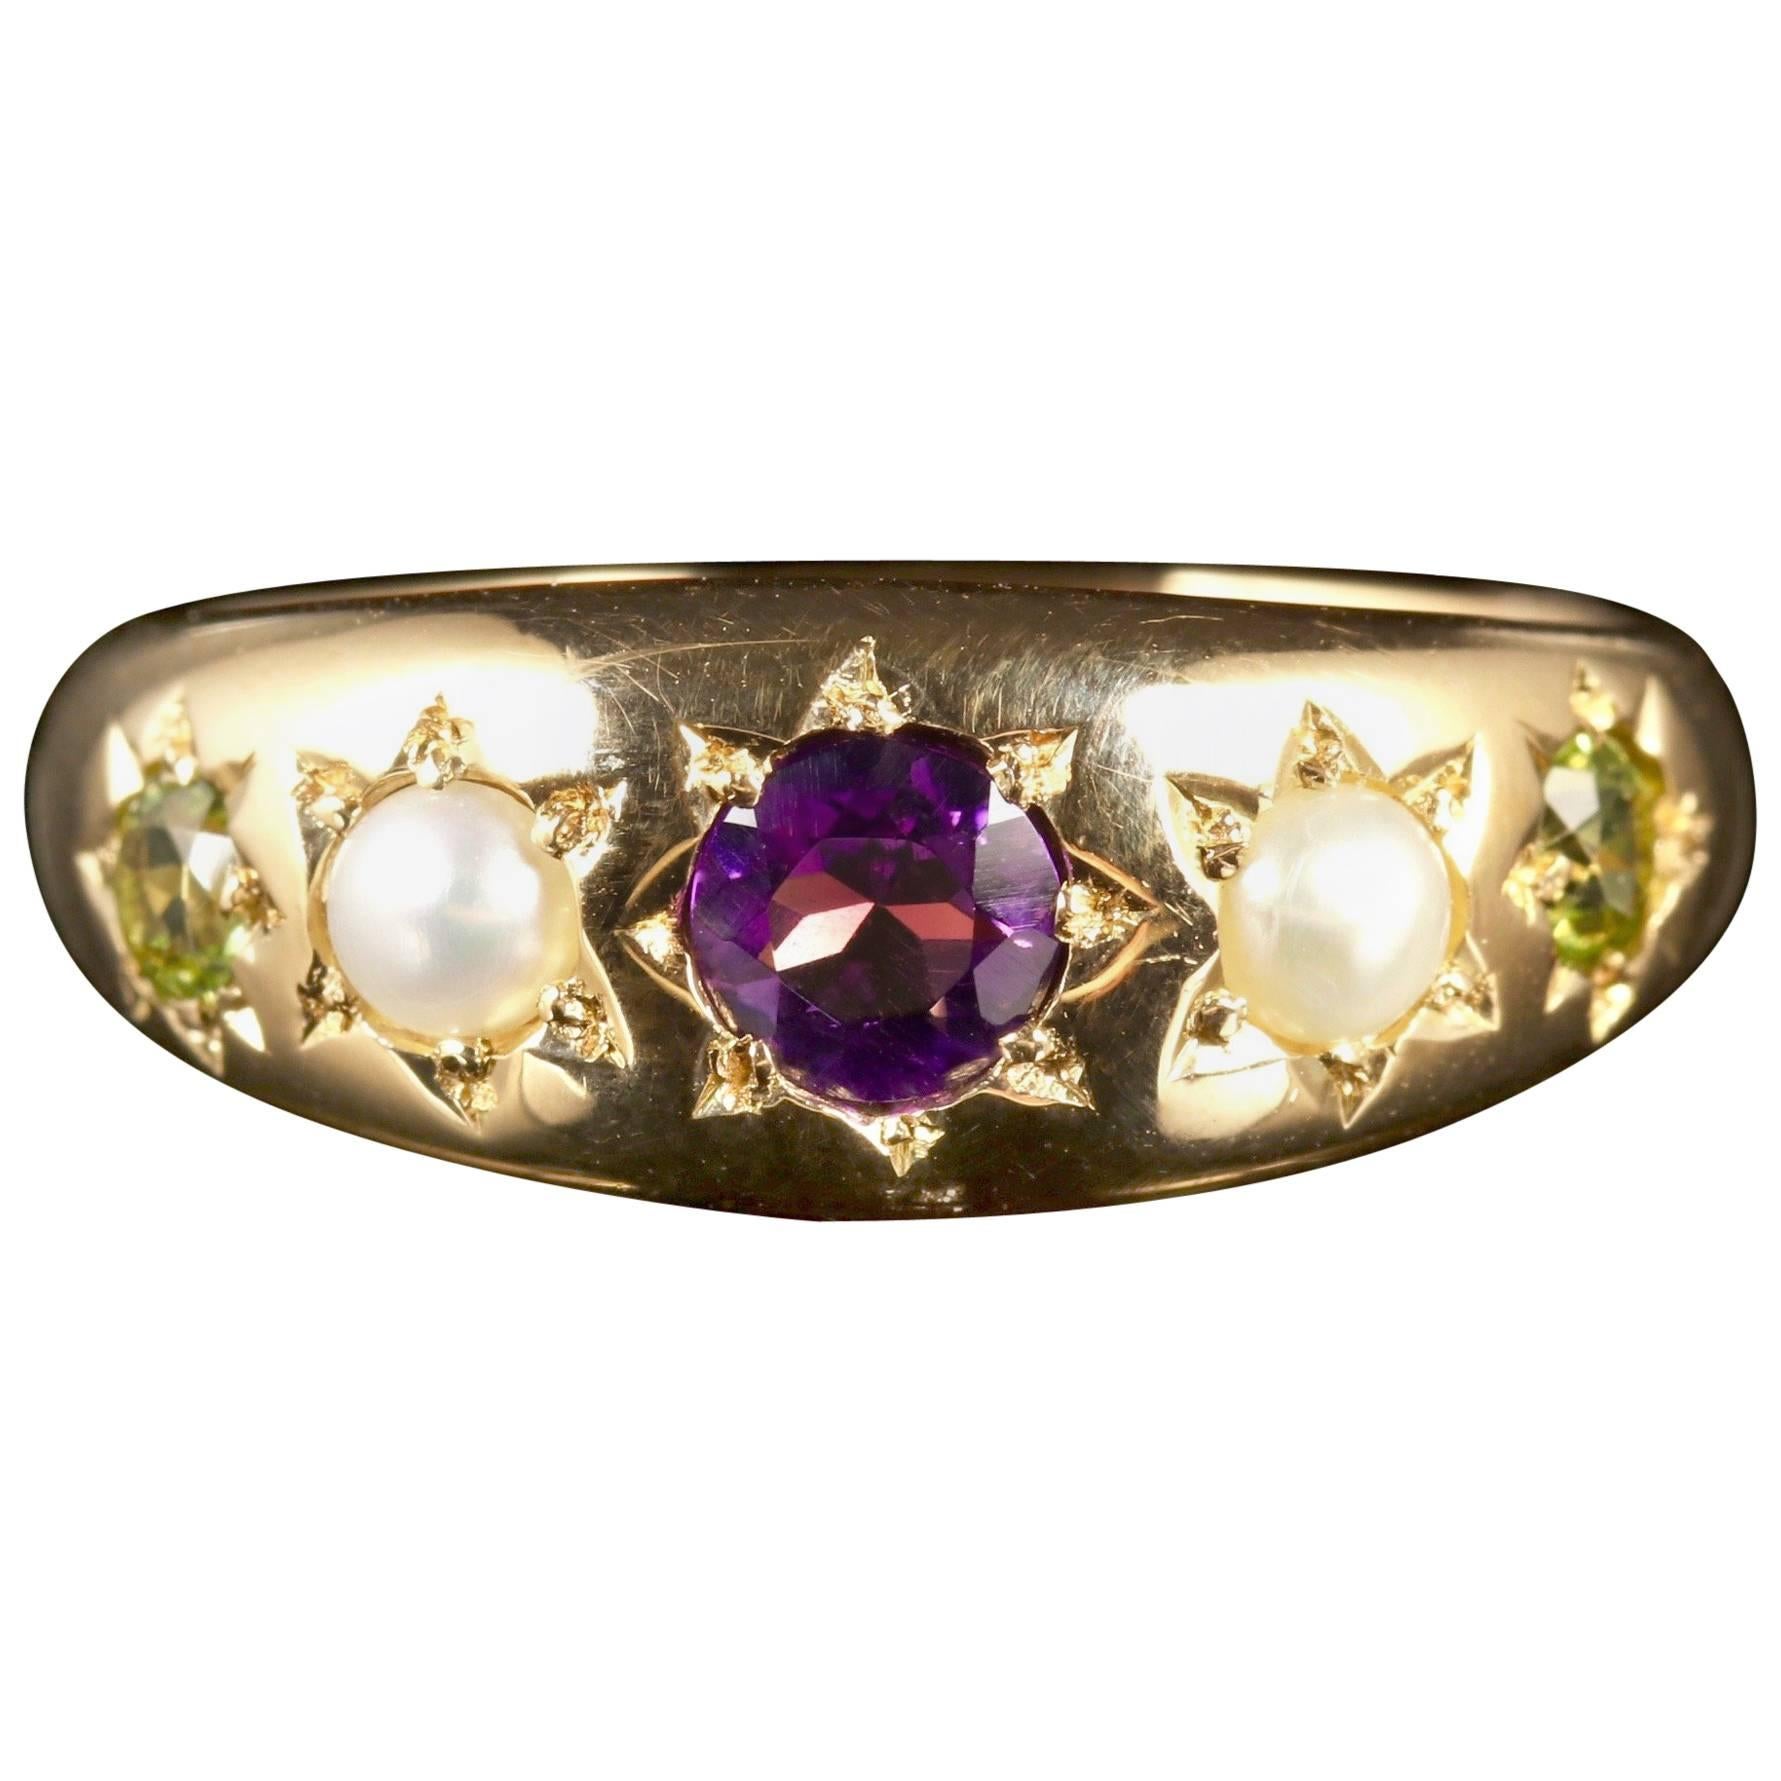 Antique Victorian Suffragette Ring Gypsy Set, circa 1900